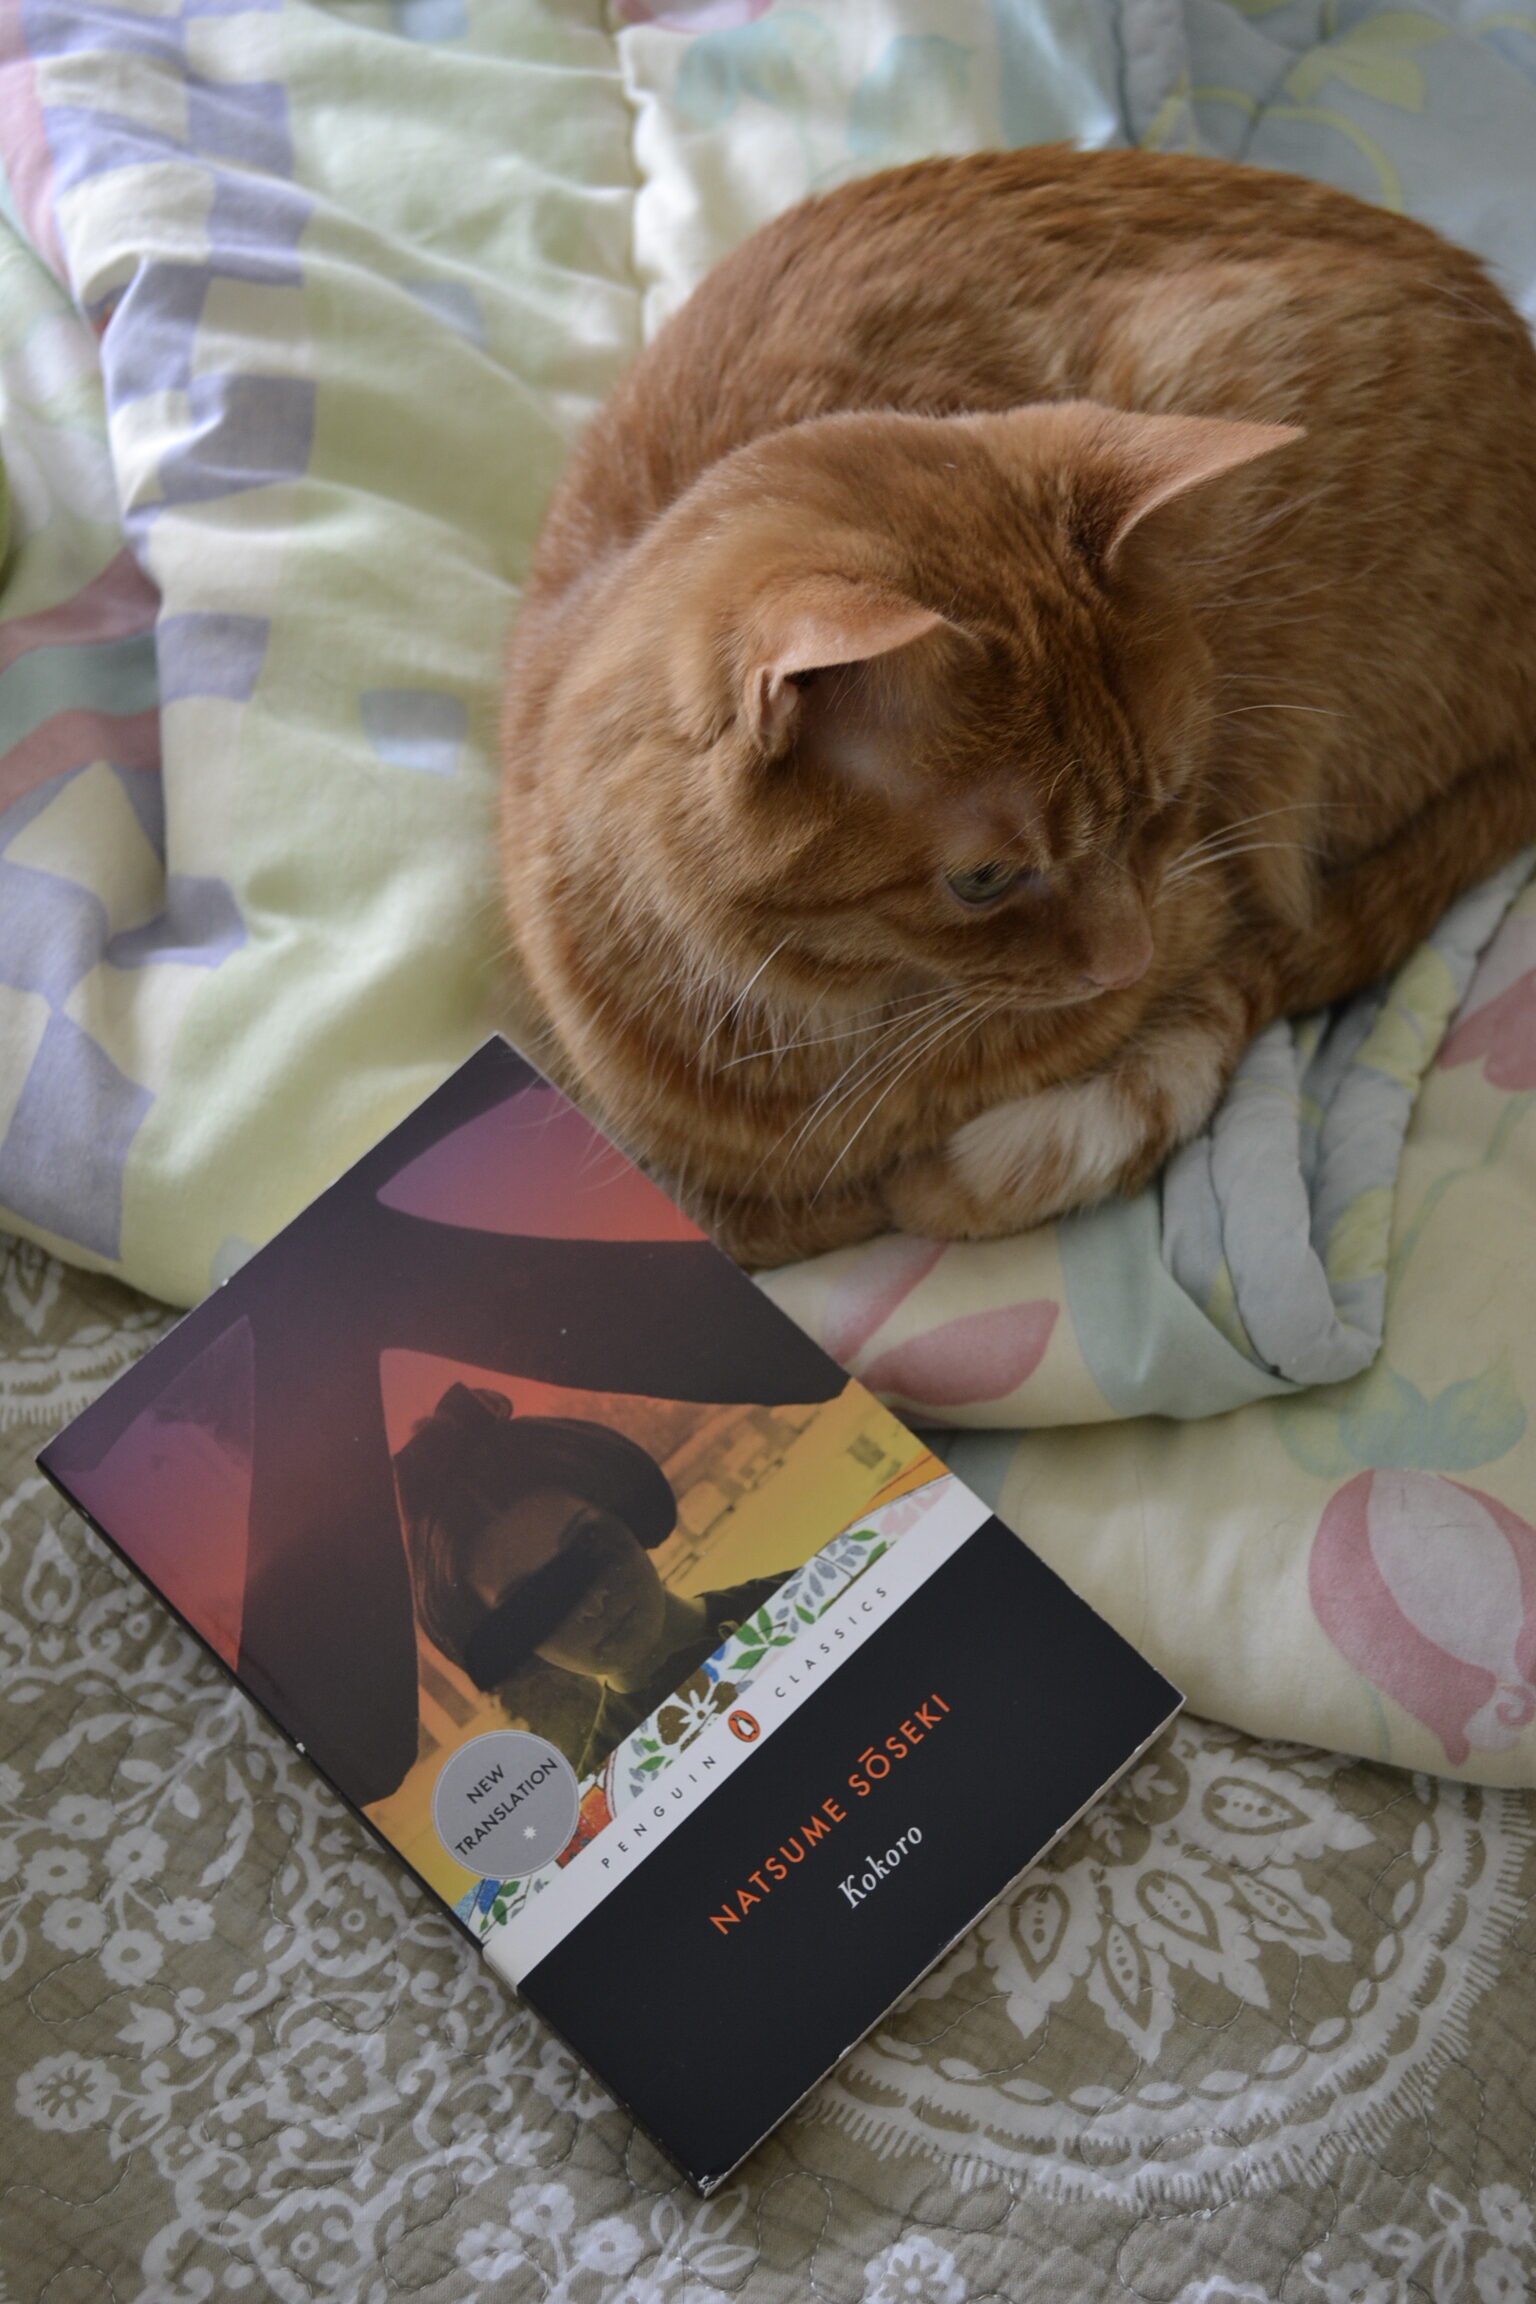 An orange cat curls beside a copy of Natsume Soseki's Kokoro.